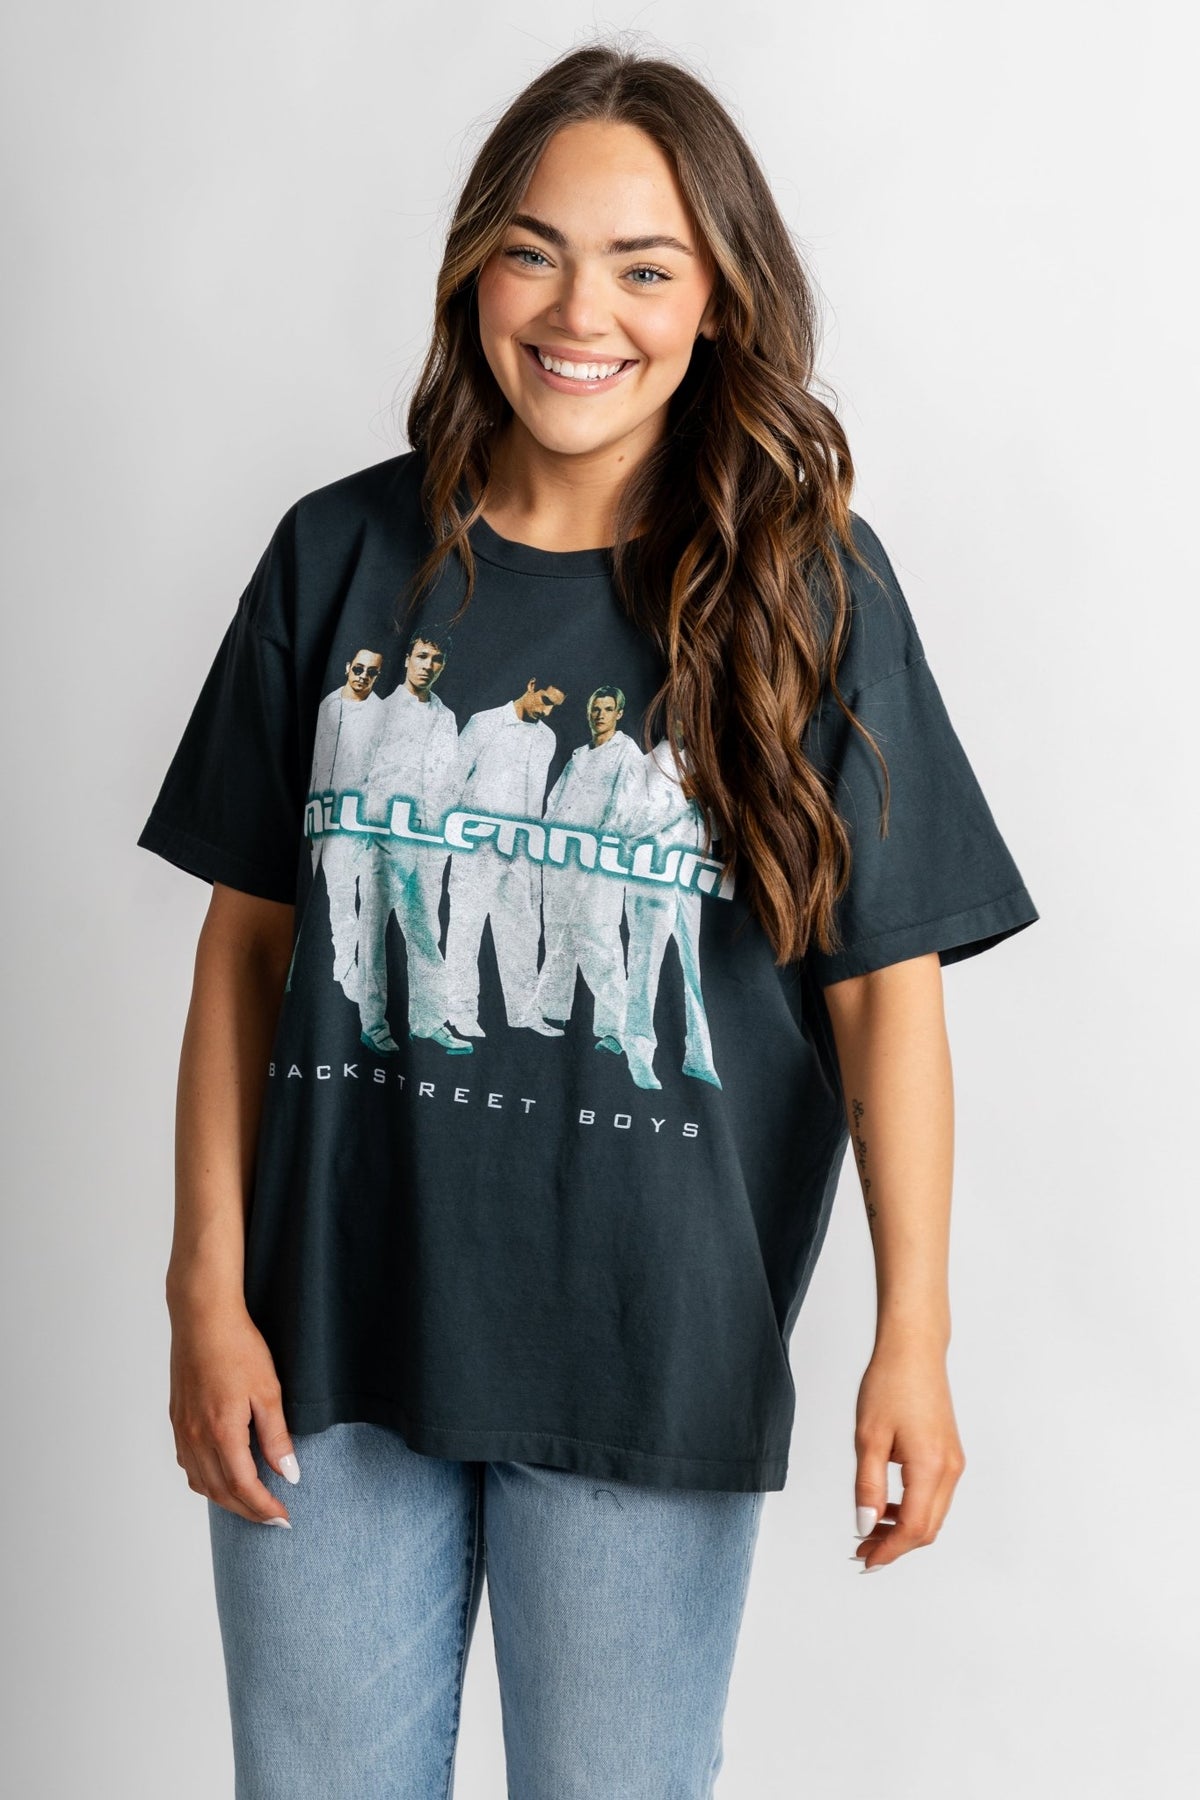 DayDreamer Backstreet Boys Millennium tee vintage black - Trendy Band T-Shirts and Sweatshirts at Lush Fashion Lounge Boutique in Oklahoma City